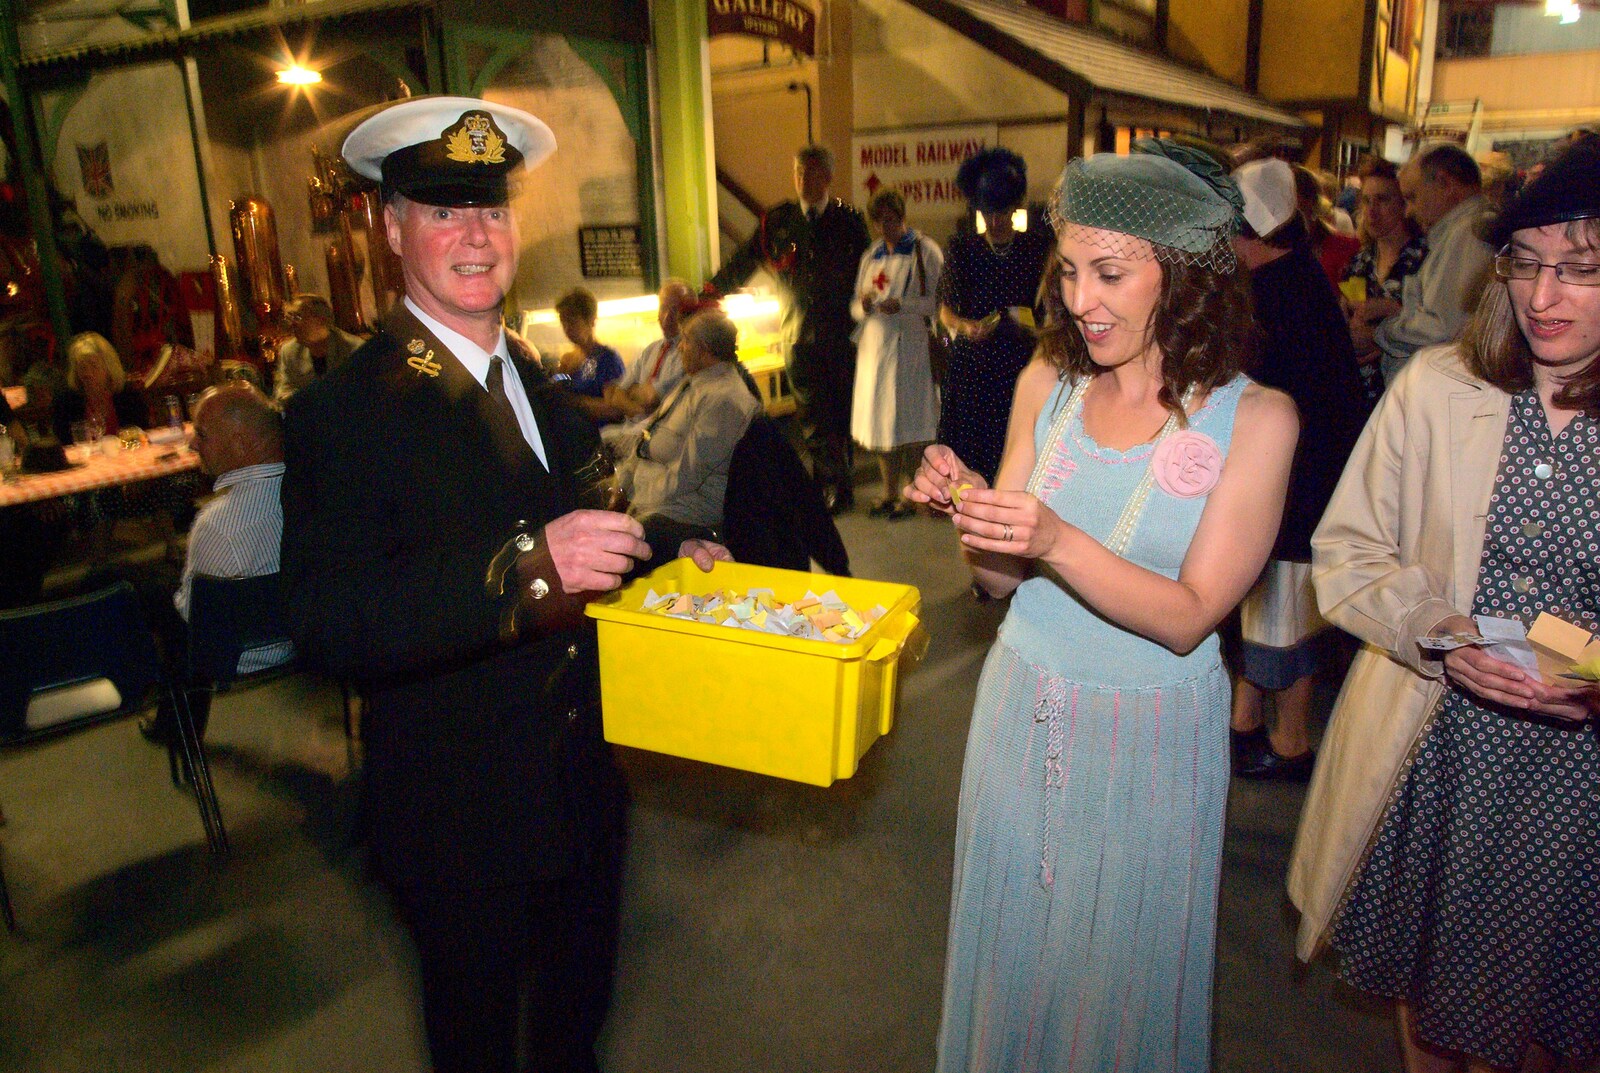 The Bressingham Blitz 1940s Dance, Bressingham Steam Museum, Norfolk - 21st May 2010: Carmen pulls out a raffle ticket